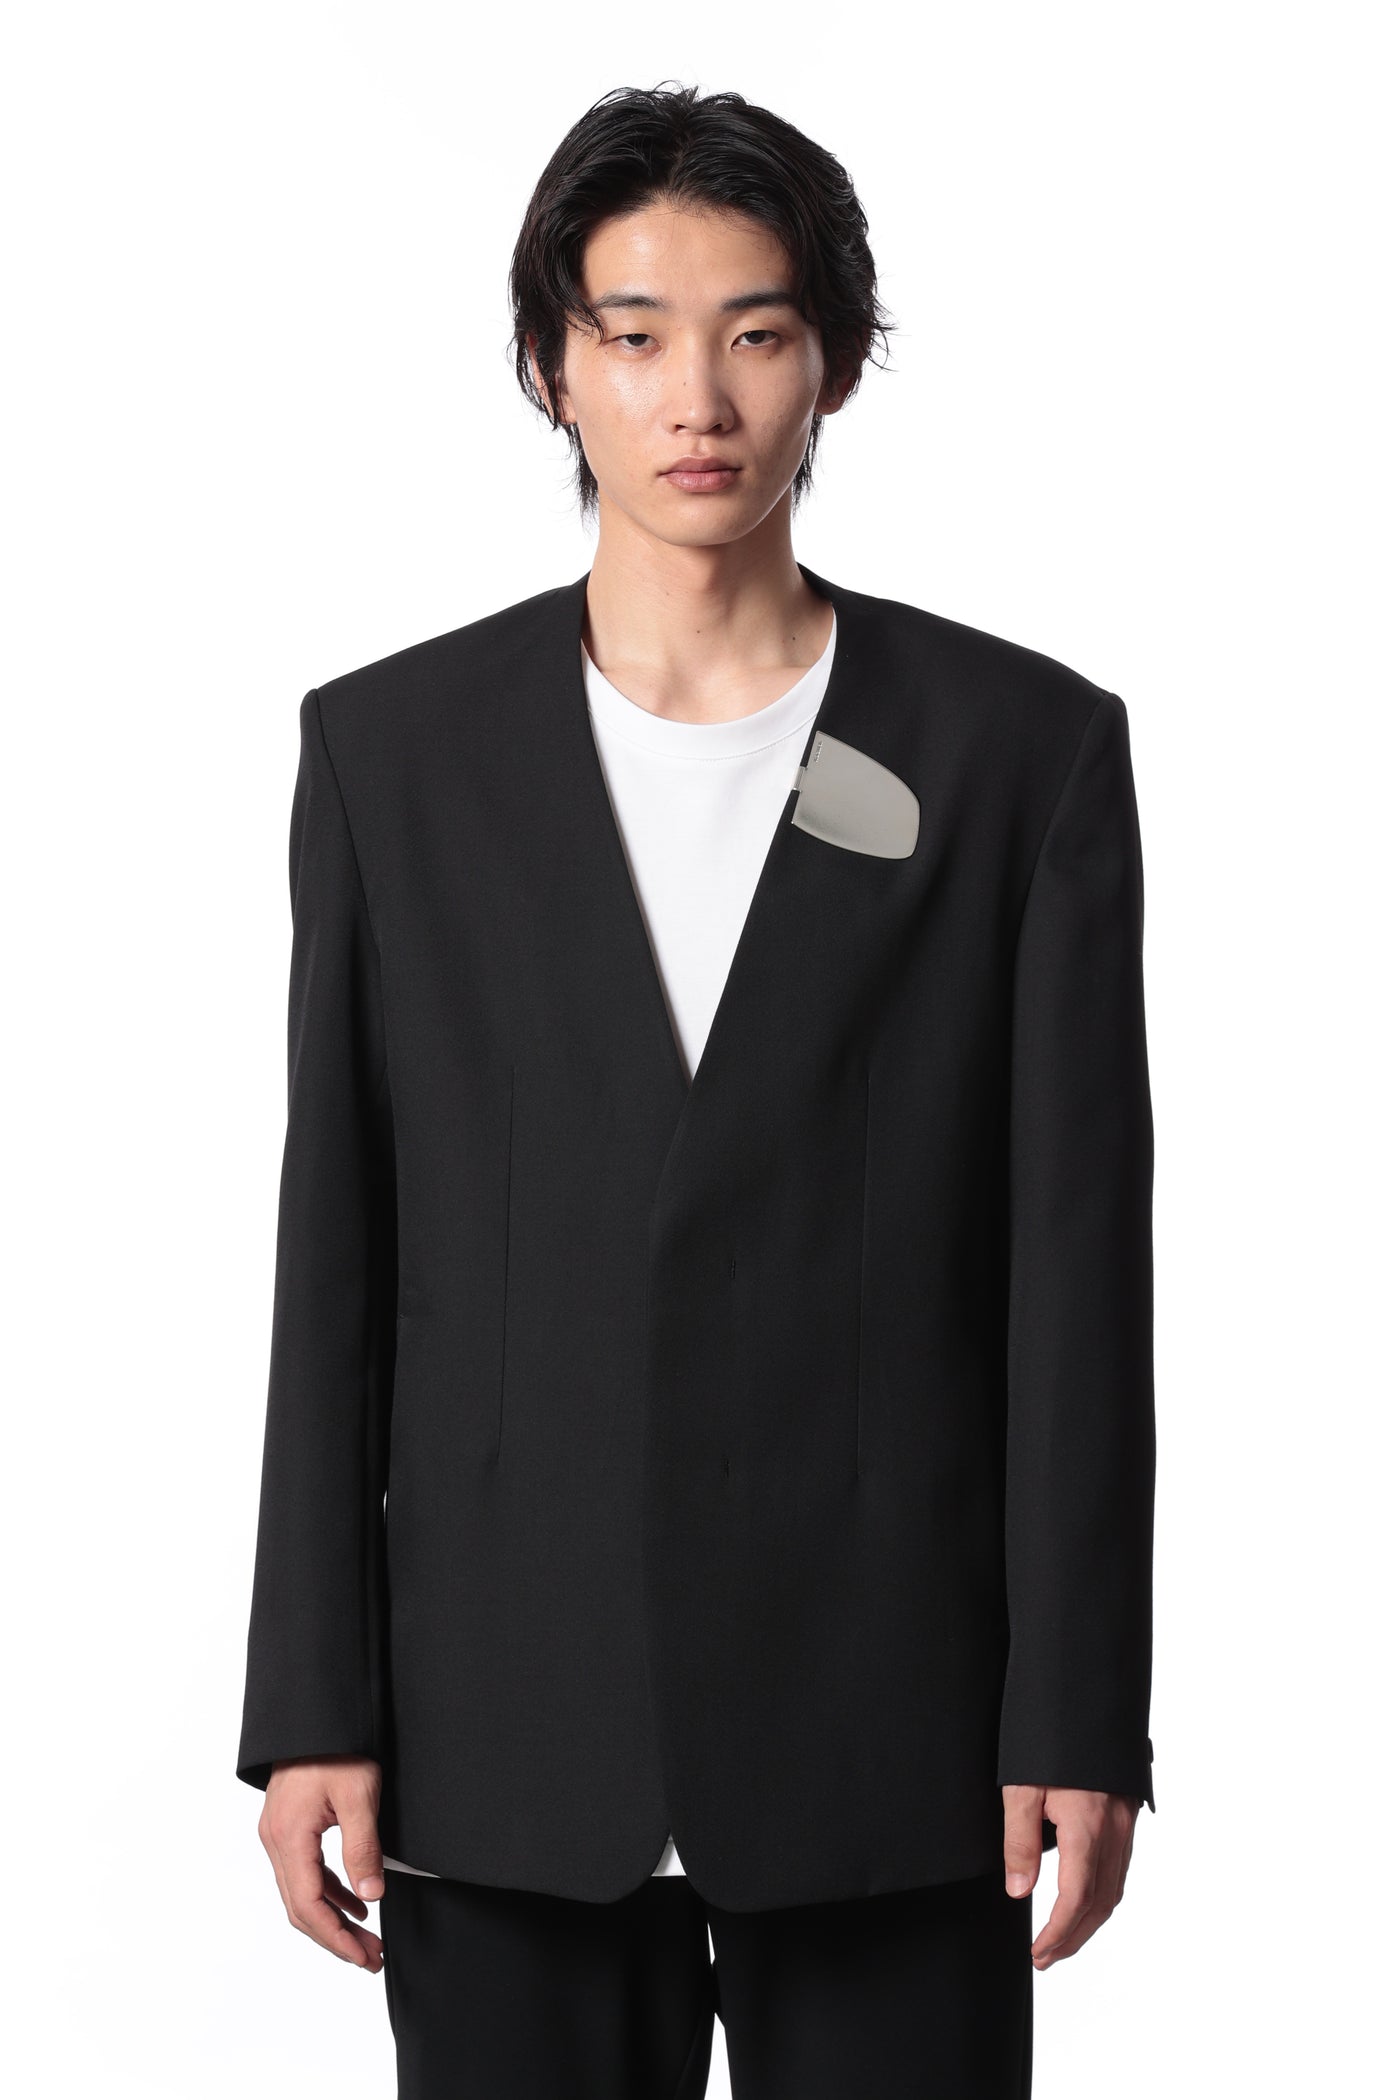 AG41-007 Polyester/wool gabardine collarless jacket